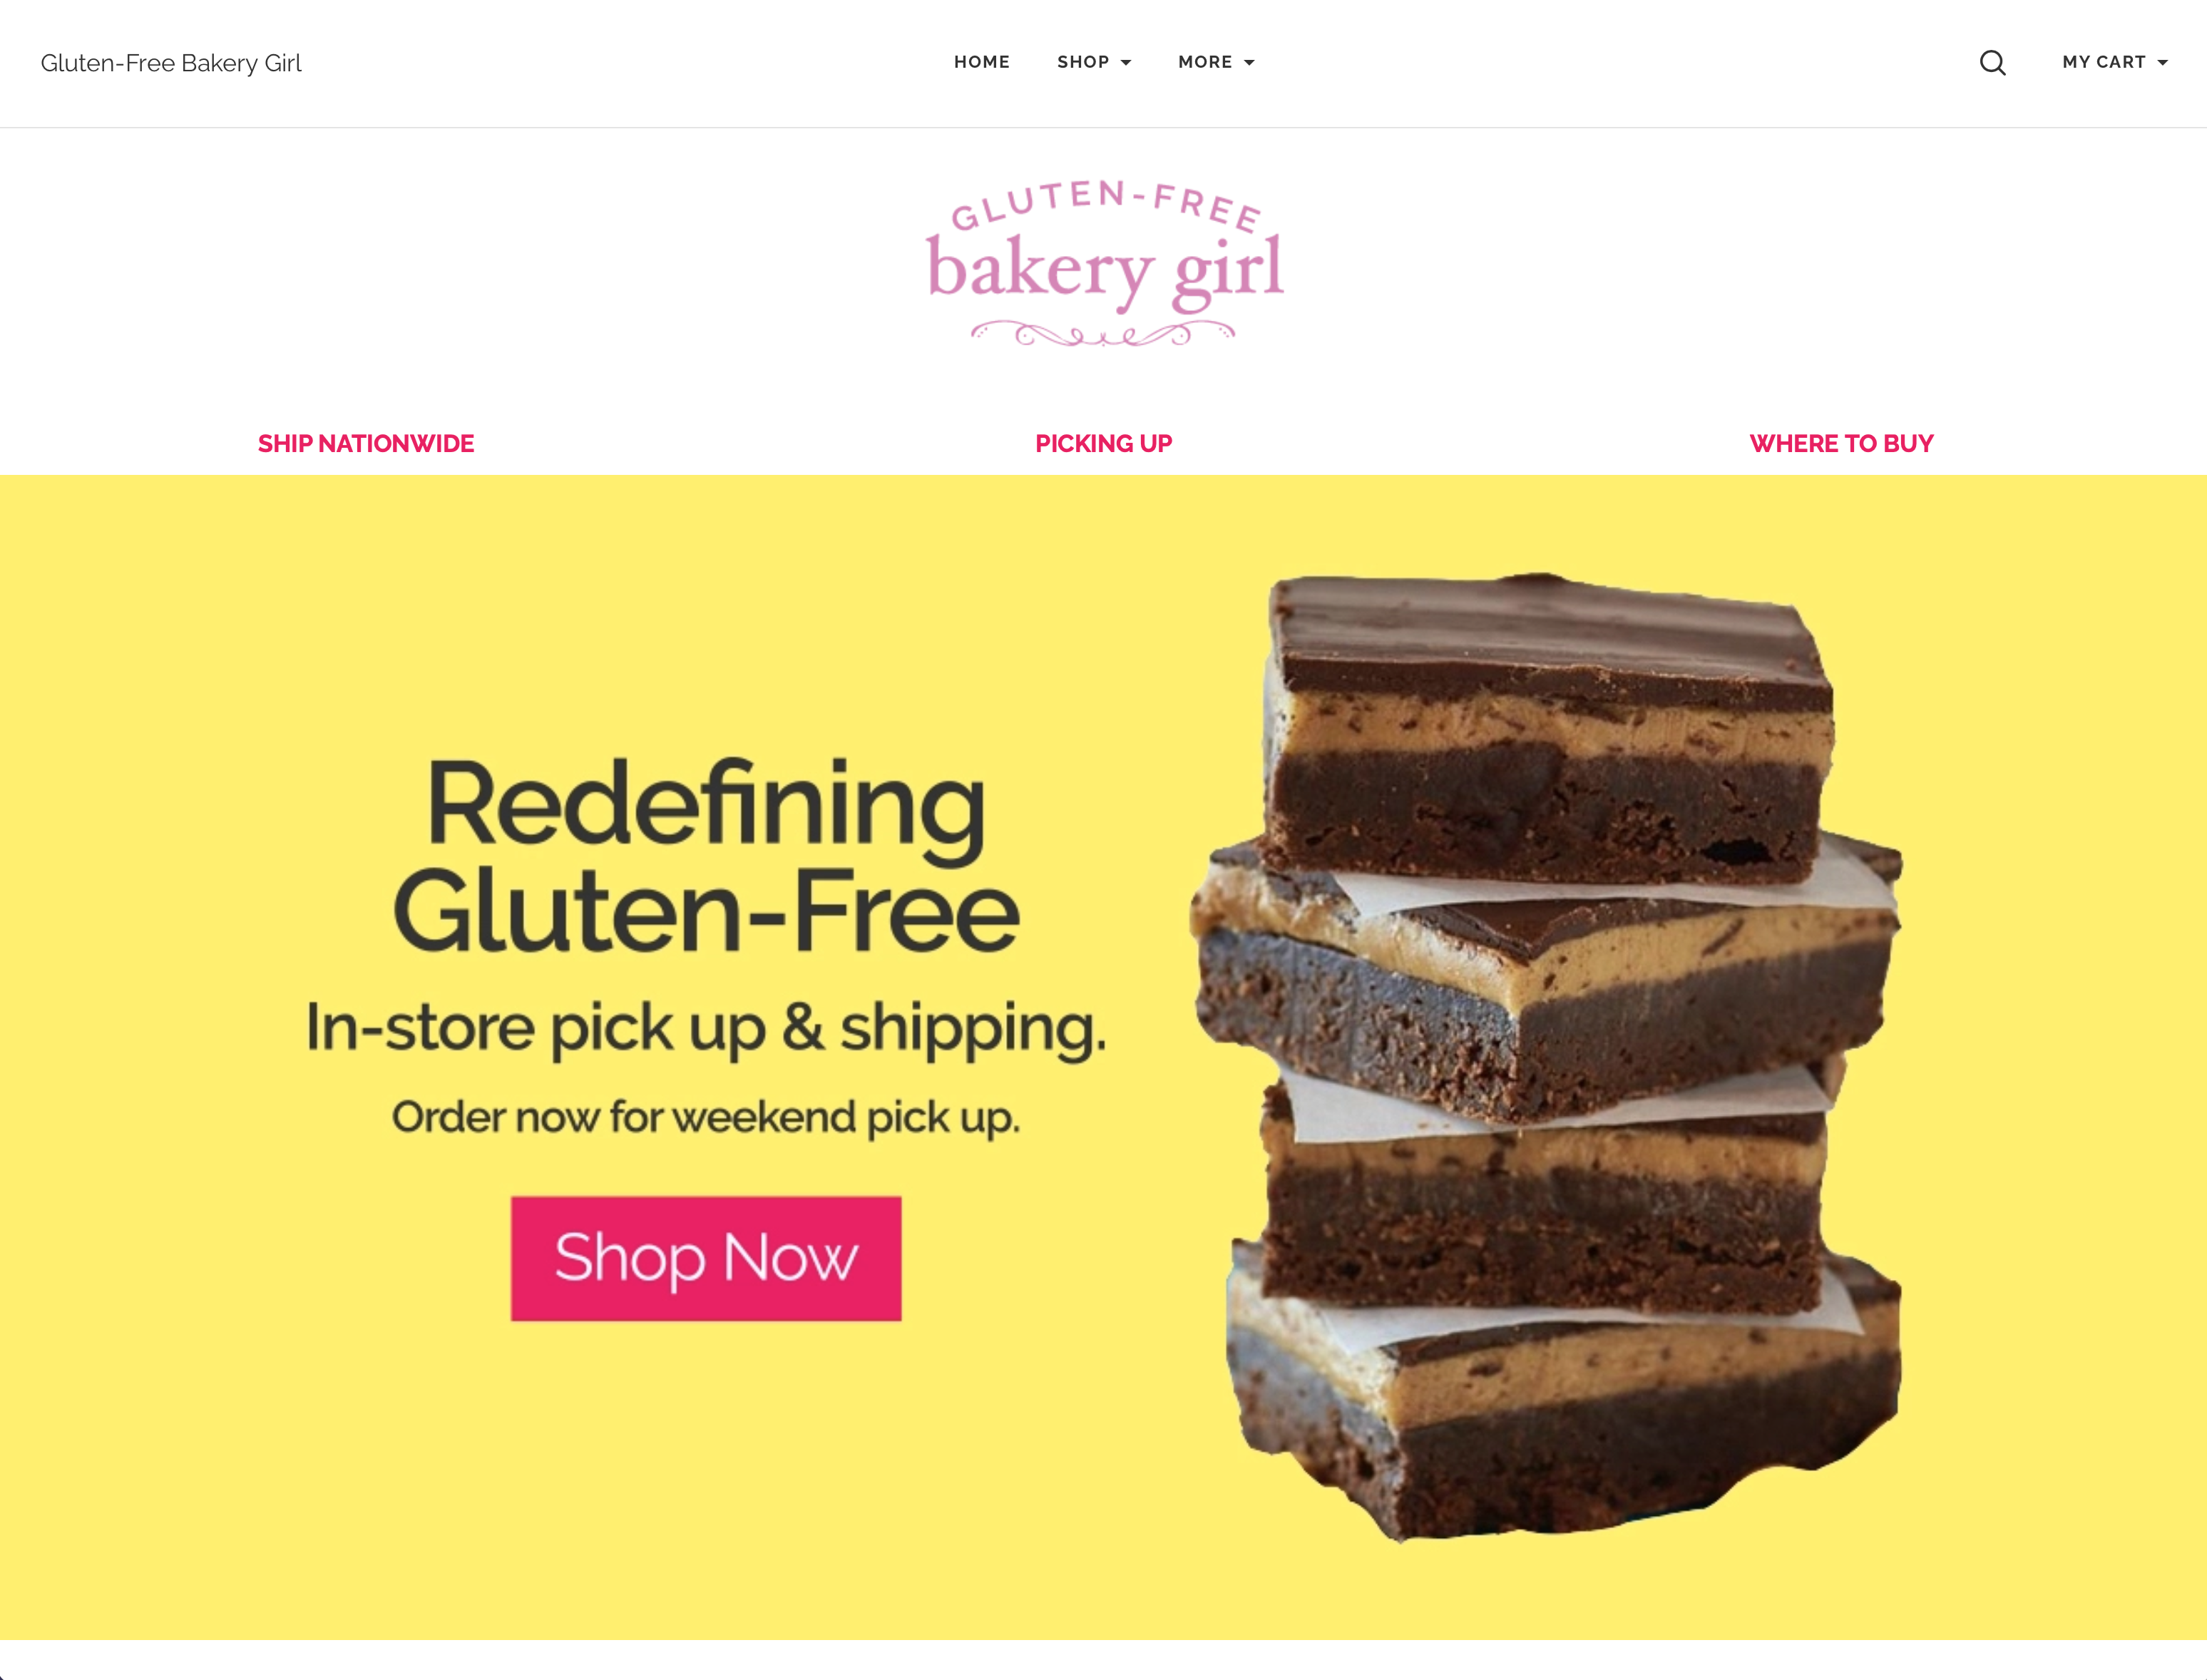 Whale Works Design Gluten-Free Bakery Girl Website